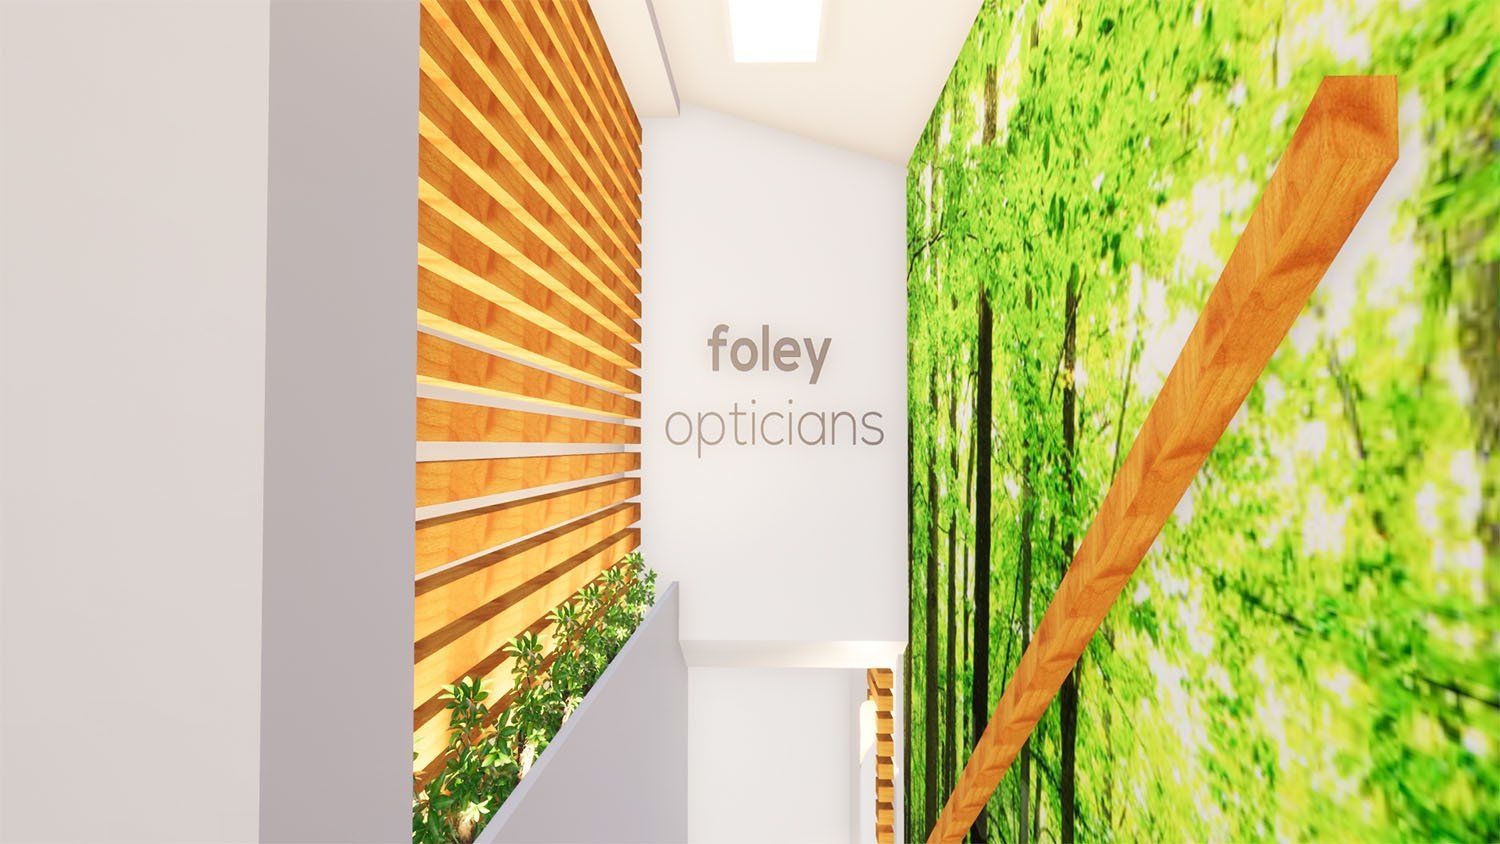 Foley Opticians - Isabel Barros Architects Wexford